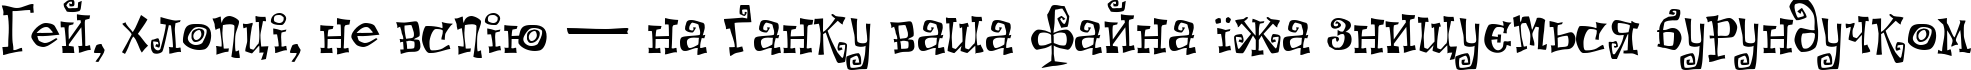 Пример написания шрифтом Kot Leopold текста на украинском